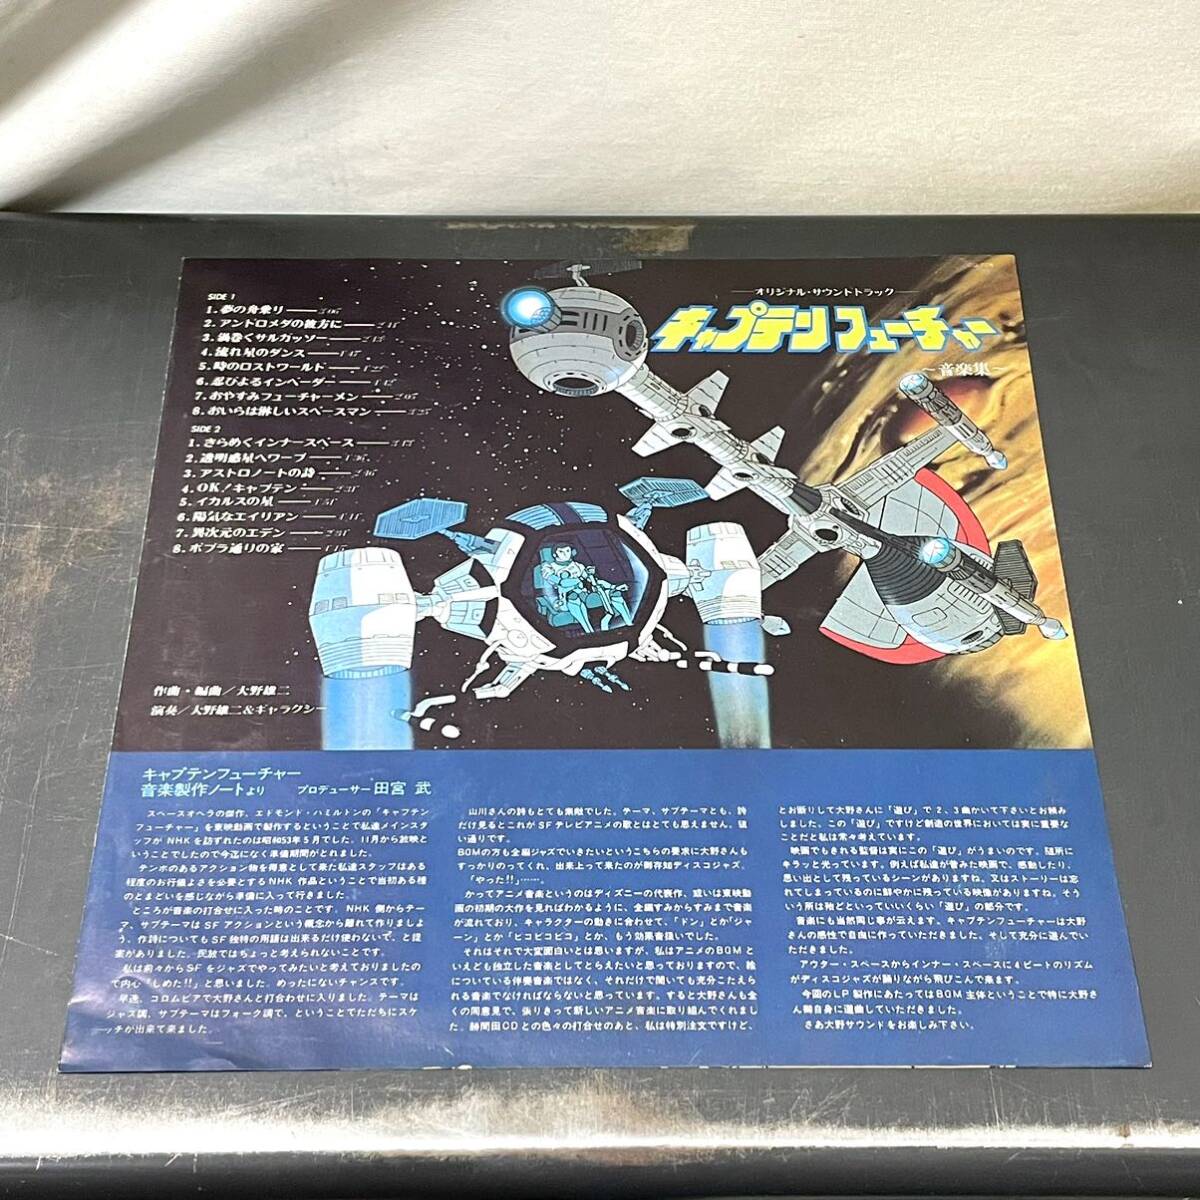 *LP* with belt * beautiful record * Captain Future music compilation original * soundtrack Japan ko rom Via CQ-7028 Oono male two peace mono record 